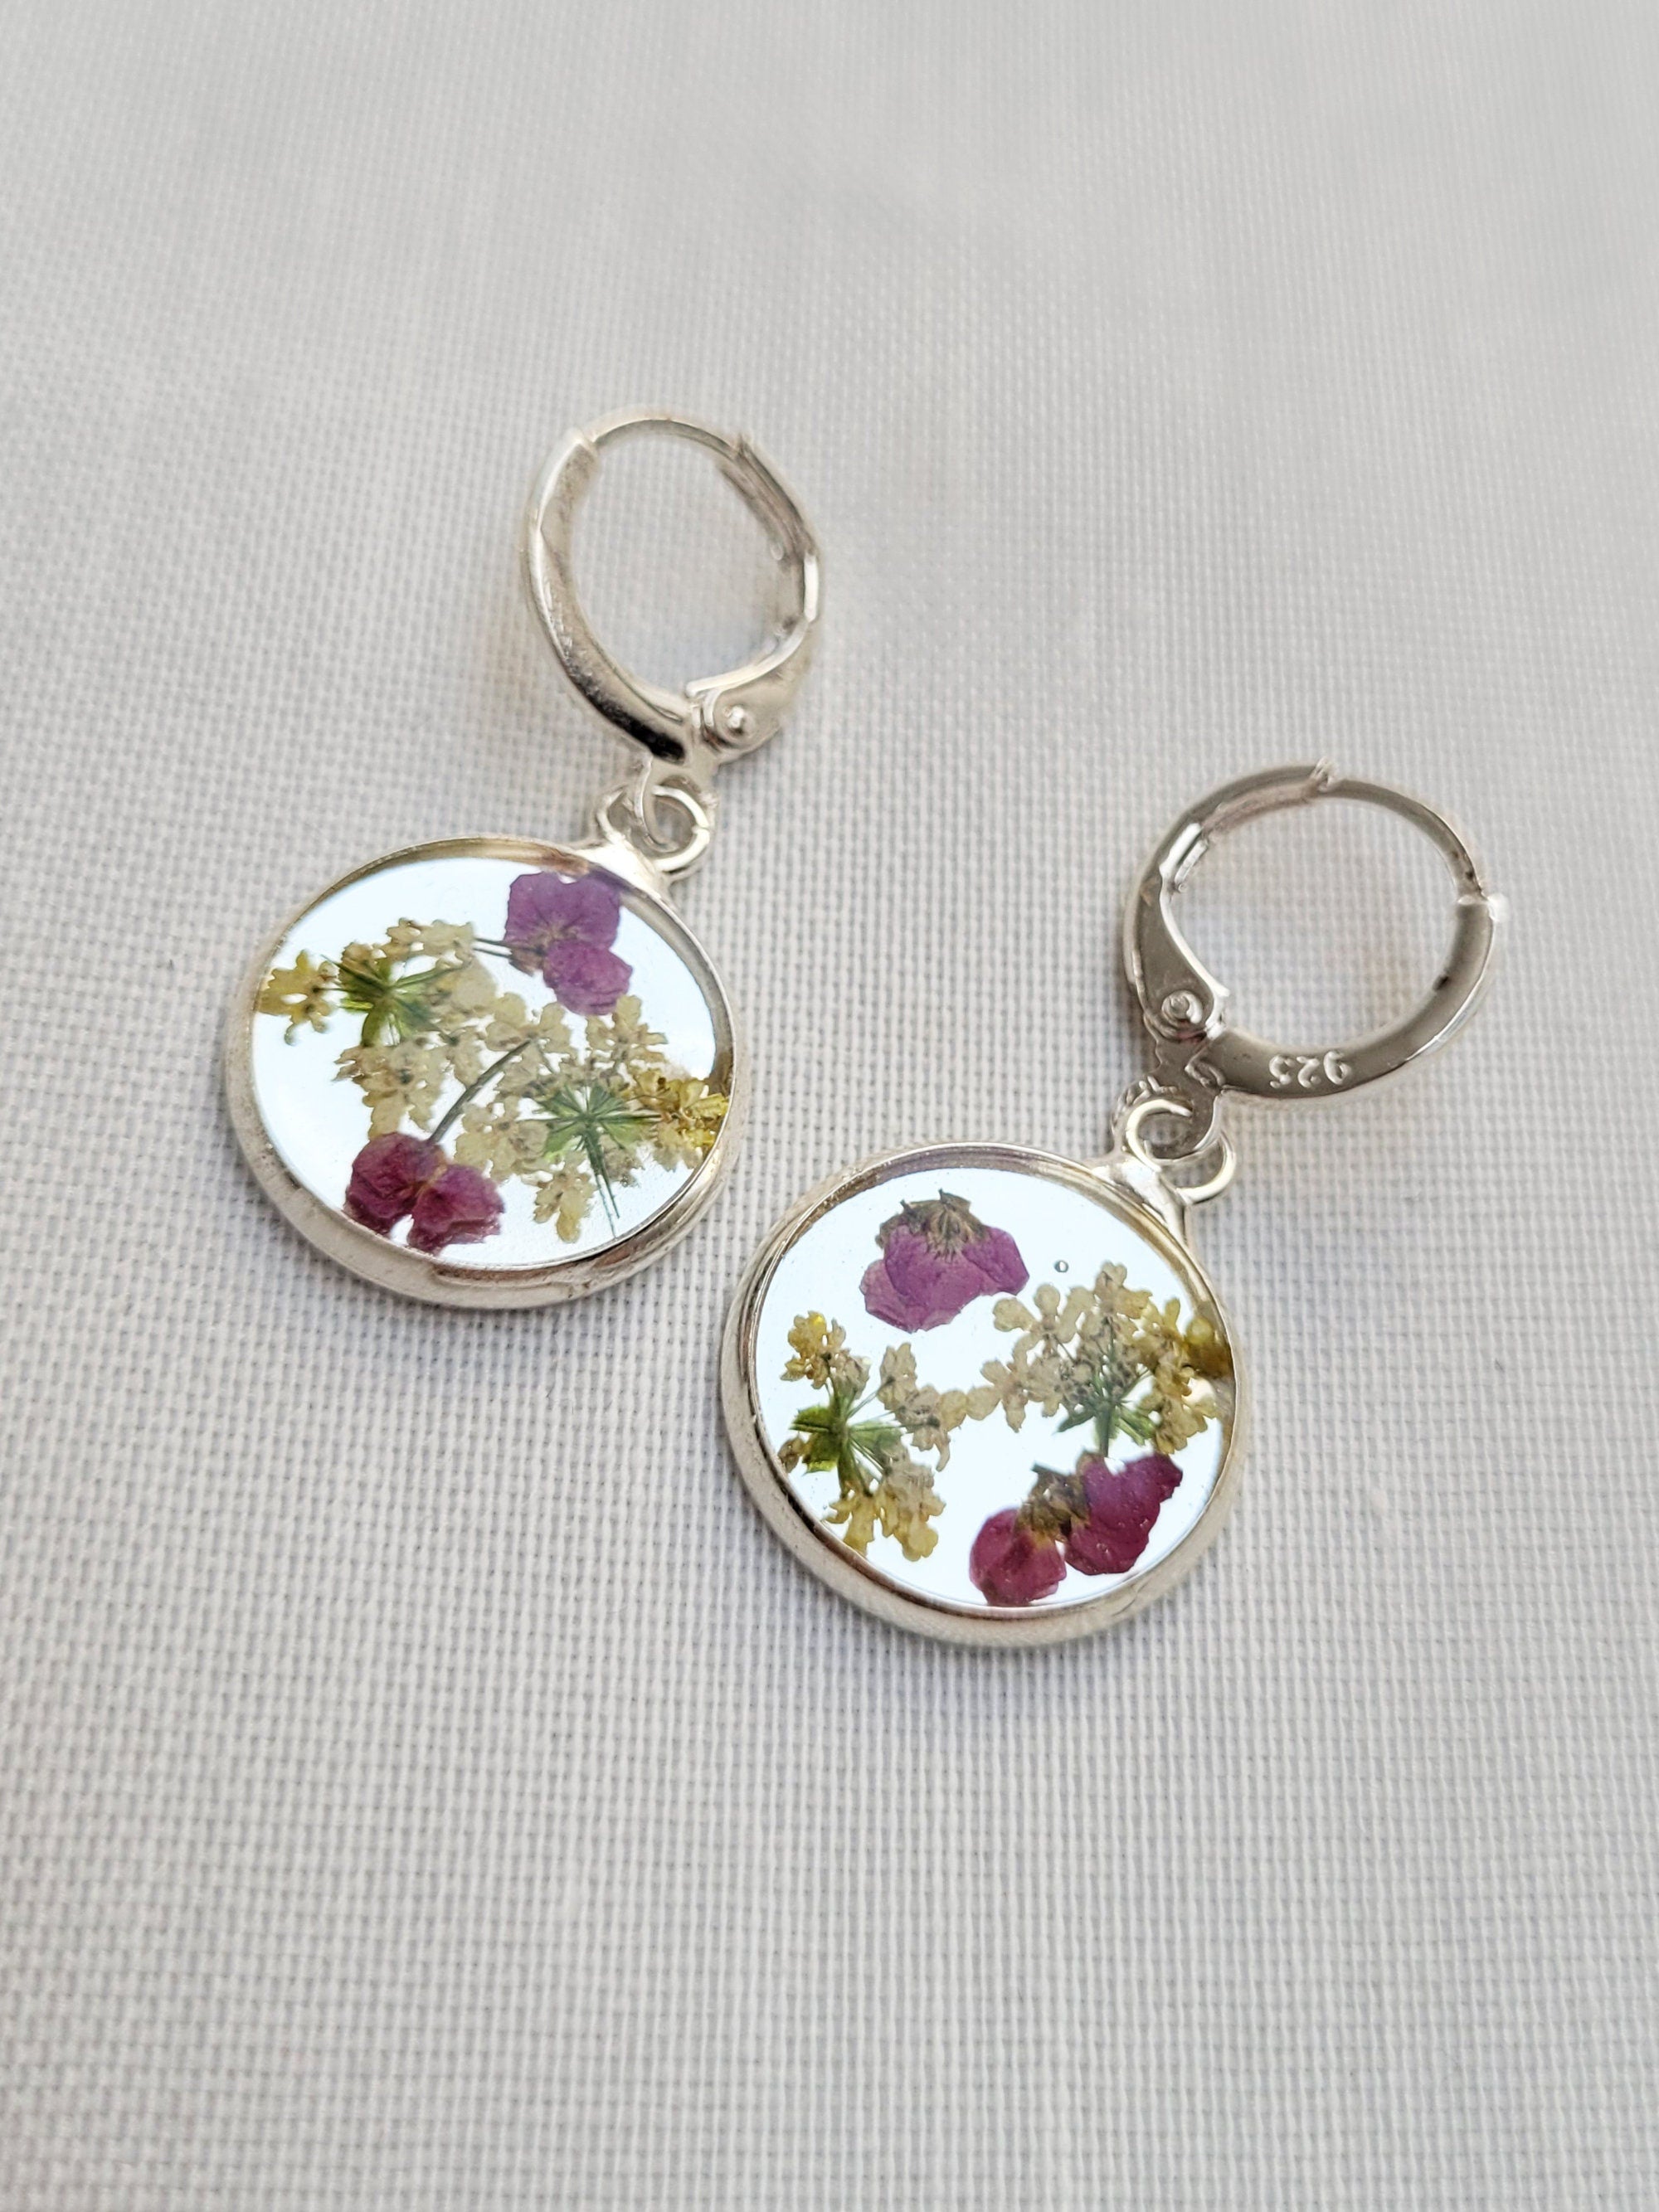 Handmade dried flower silver round 15mm dangle earrings,   E4 15mm